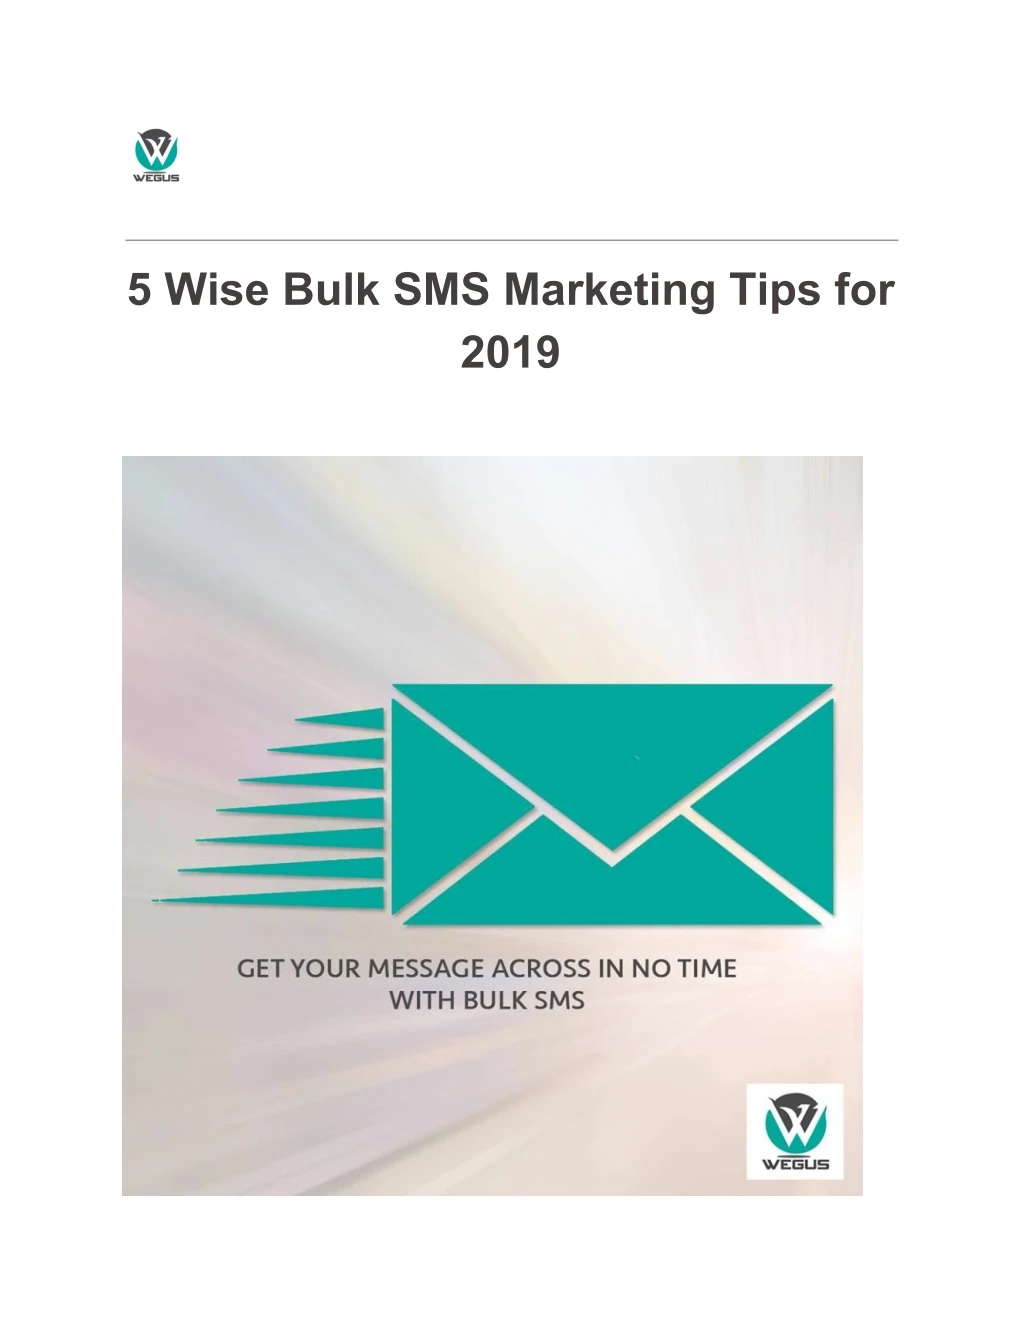 5 wise bulk sms marketing tips for 2019